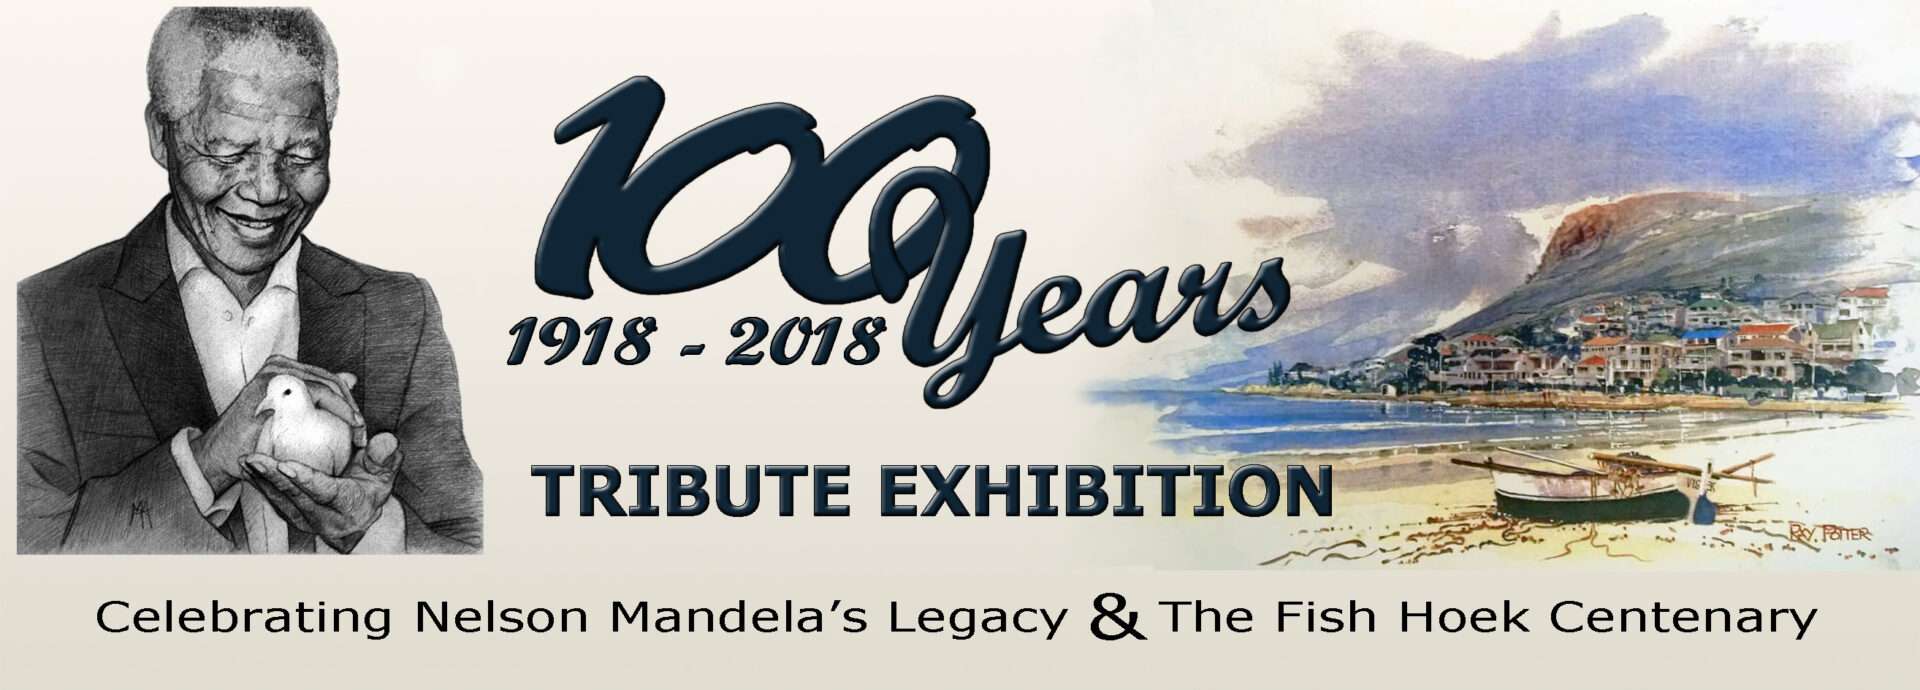 100 Years Tribute Exhibition Header